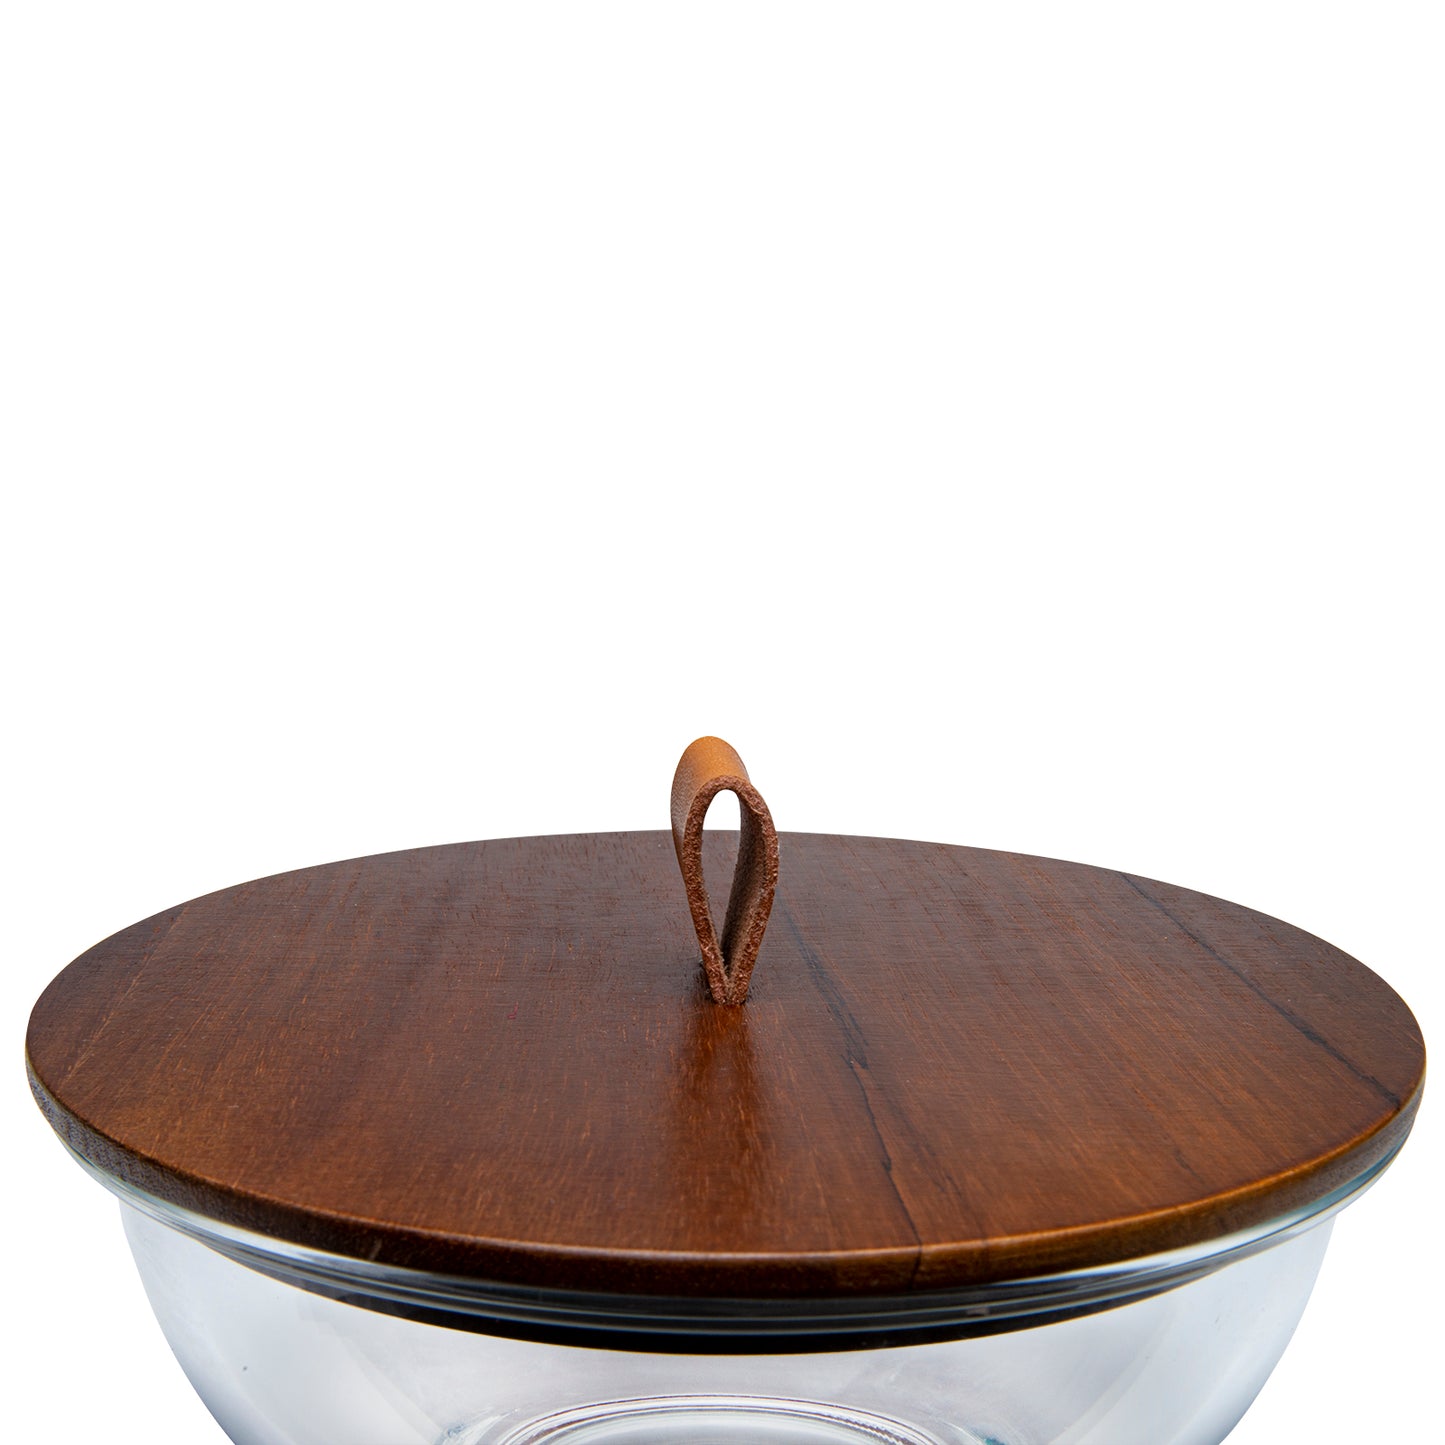 Borosilicate Glass Bowl with Wood Lid